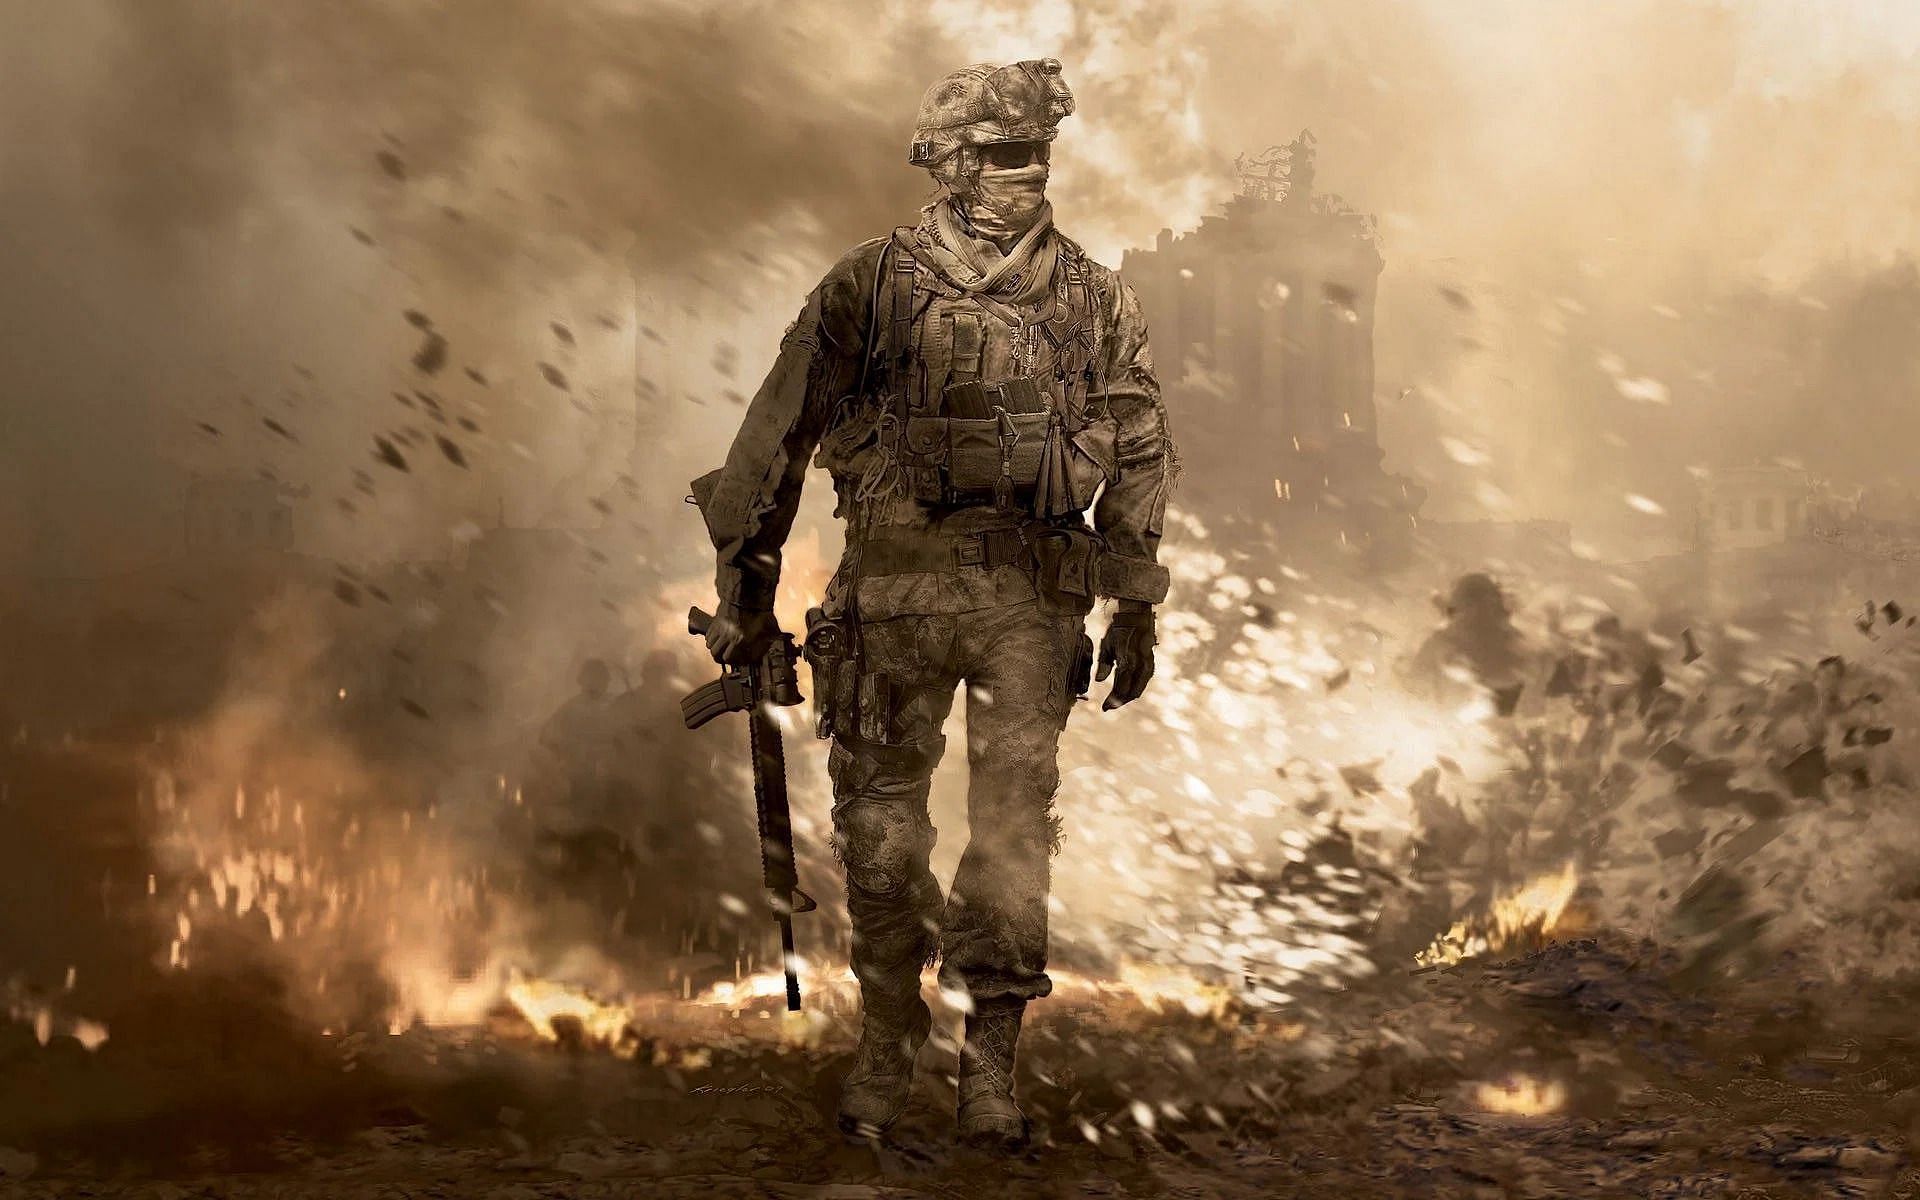  Modern Warfare 2 (2009) (Image via Activision)